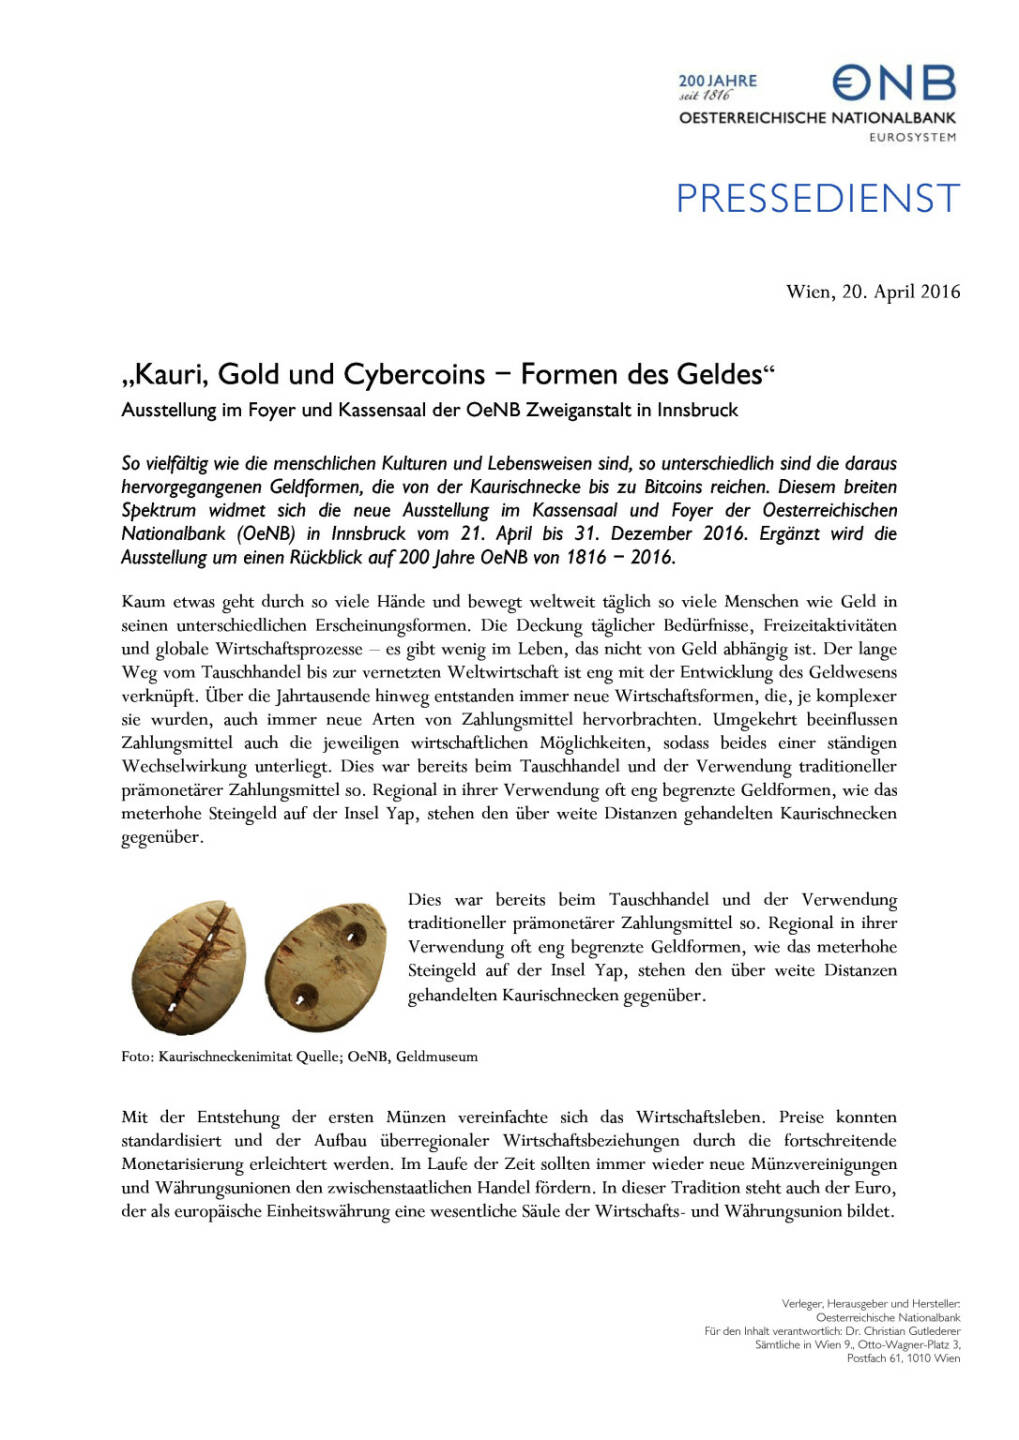 OeNB: „Kauri, Gold und Cybercoins – Formen des Geldes“, Seite 1/2, komplettes Dokument unter http://boerse-social.com/static/uploads/file_913_oenb_kauri_gold_und_cybercoins_formen_des_geldes.pdf